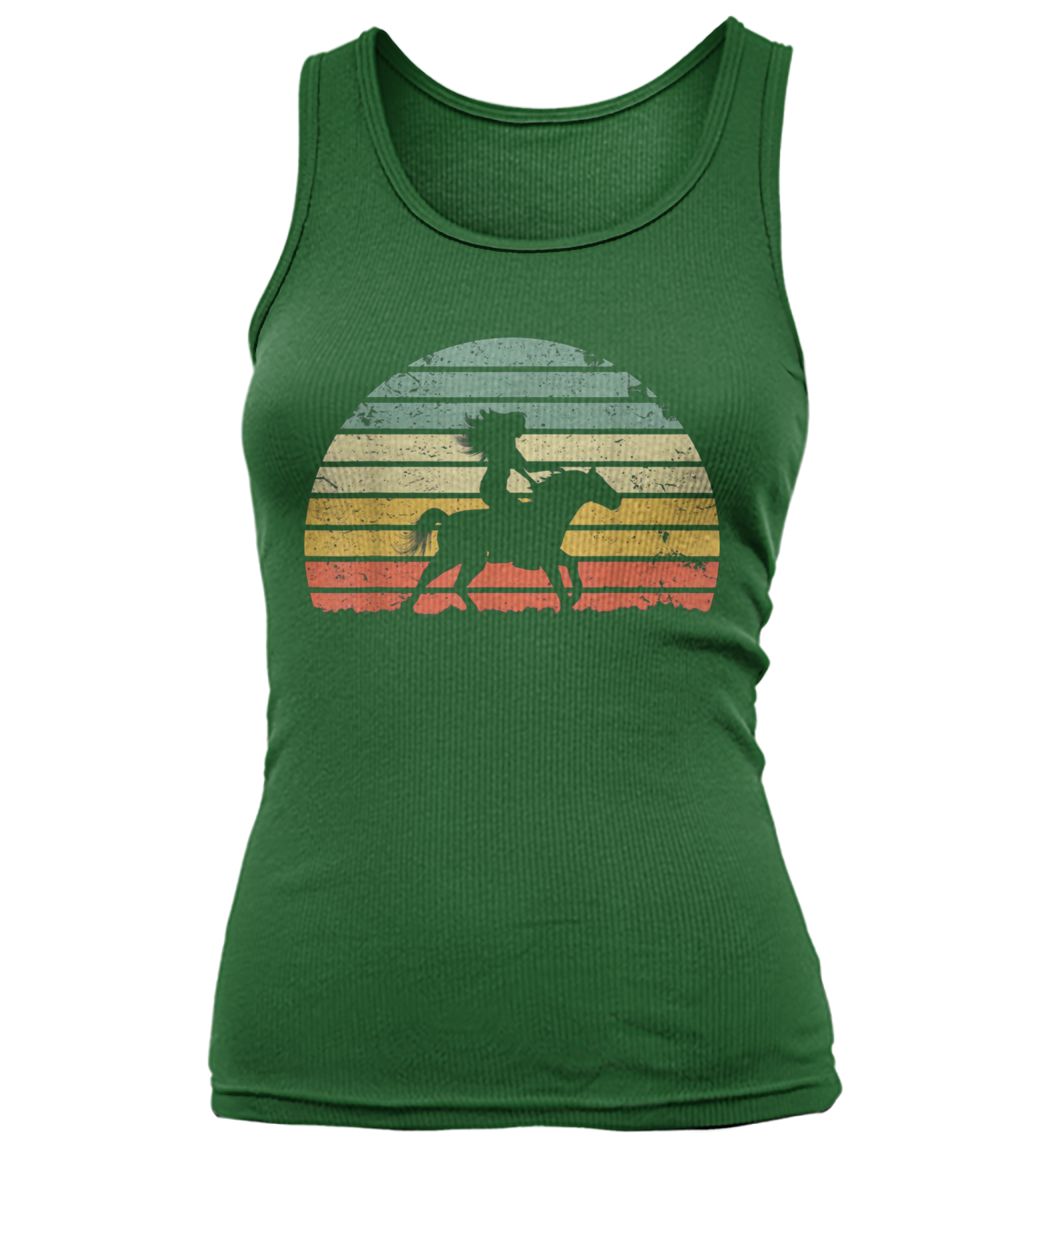 Girl horse riding vintage women's tank top